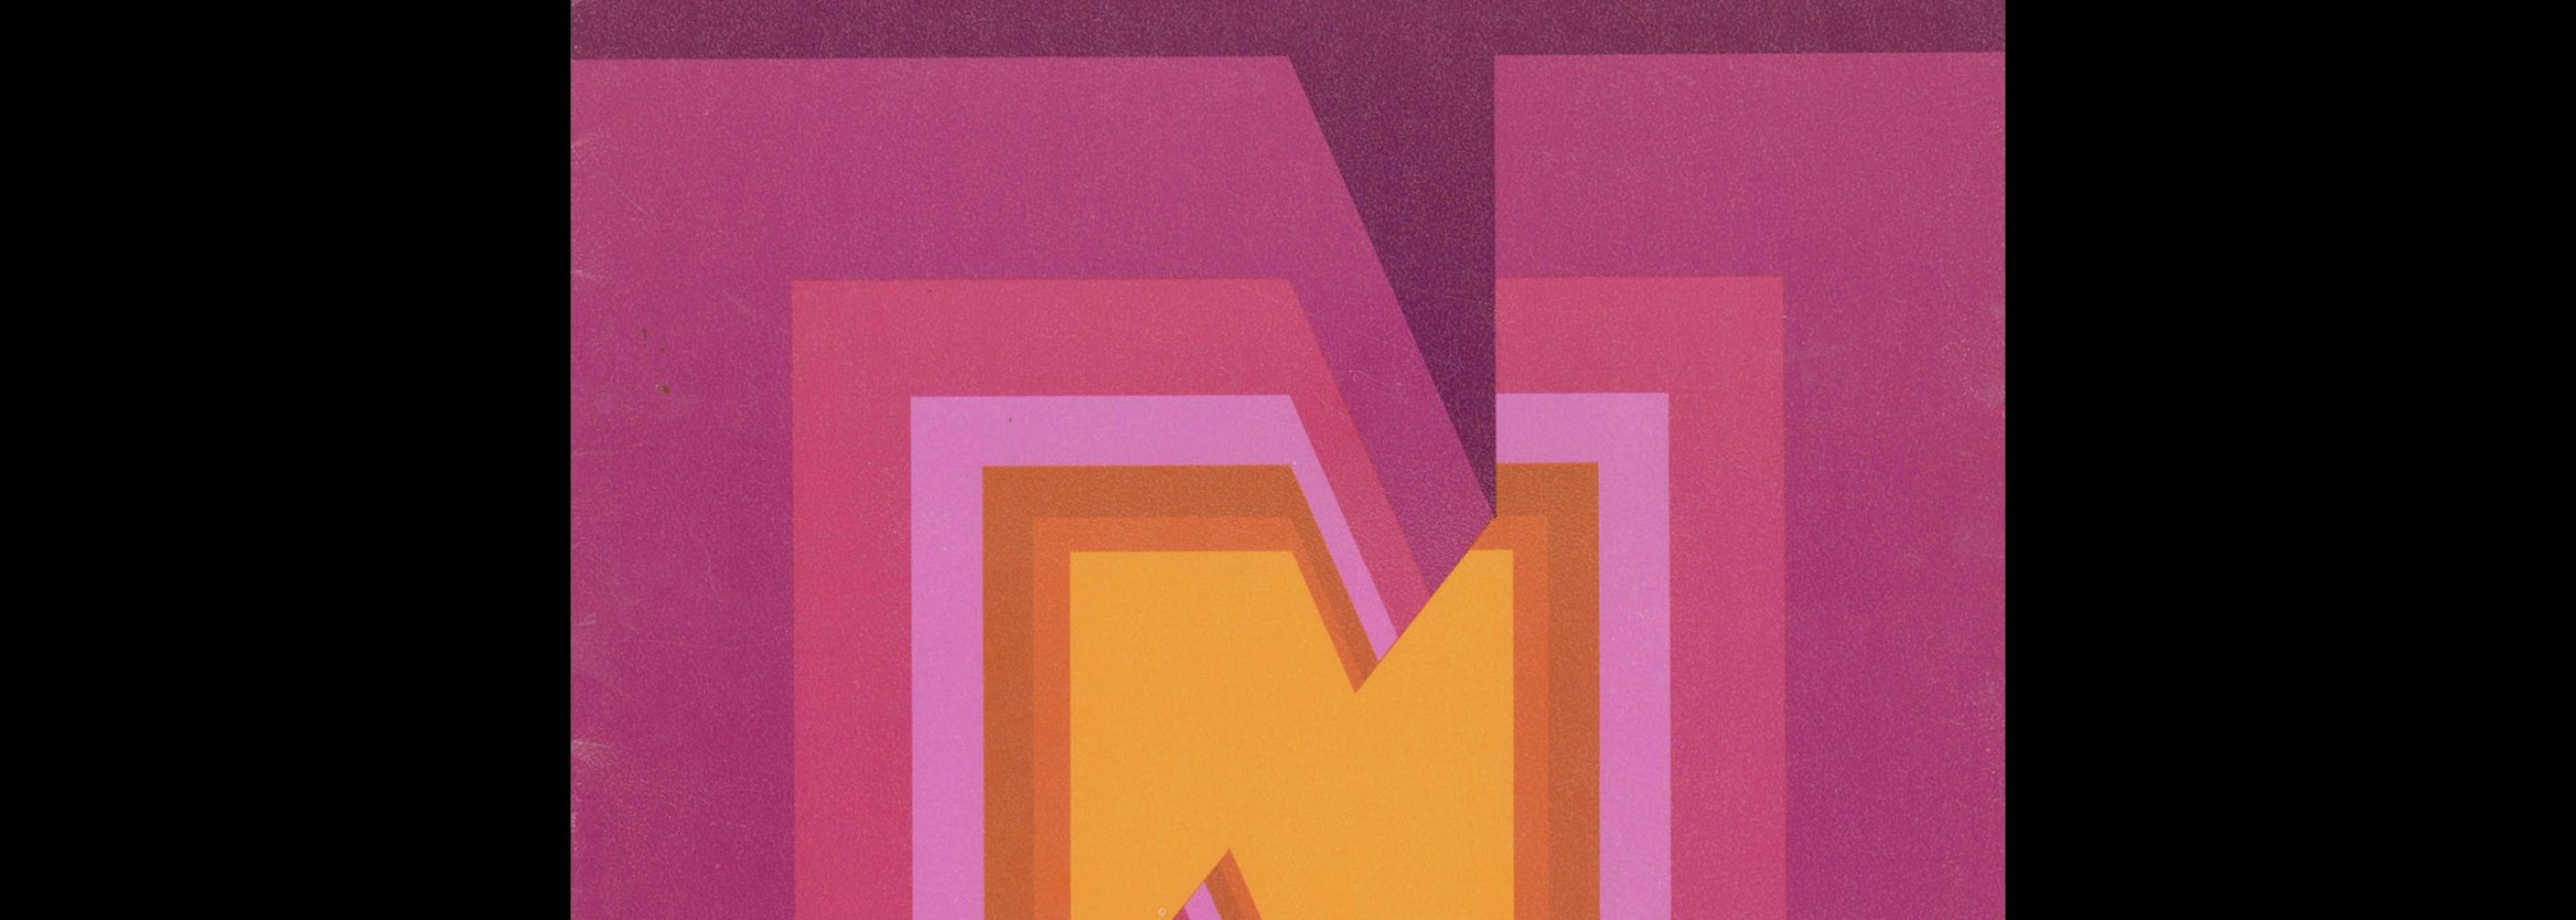 Mecanorma, Typeface Catalogue, 1970